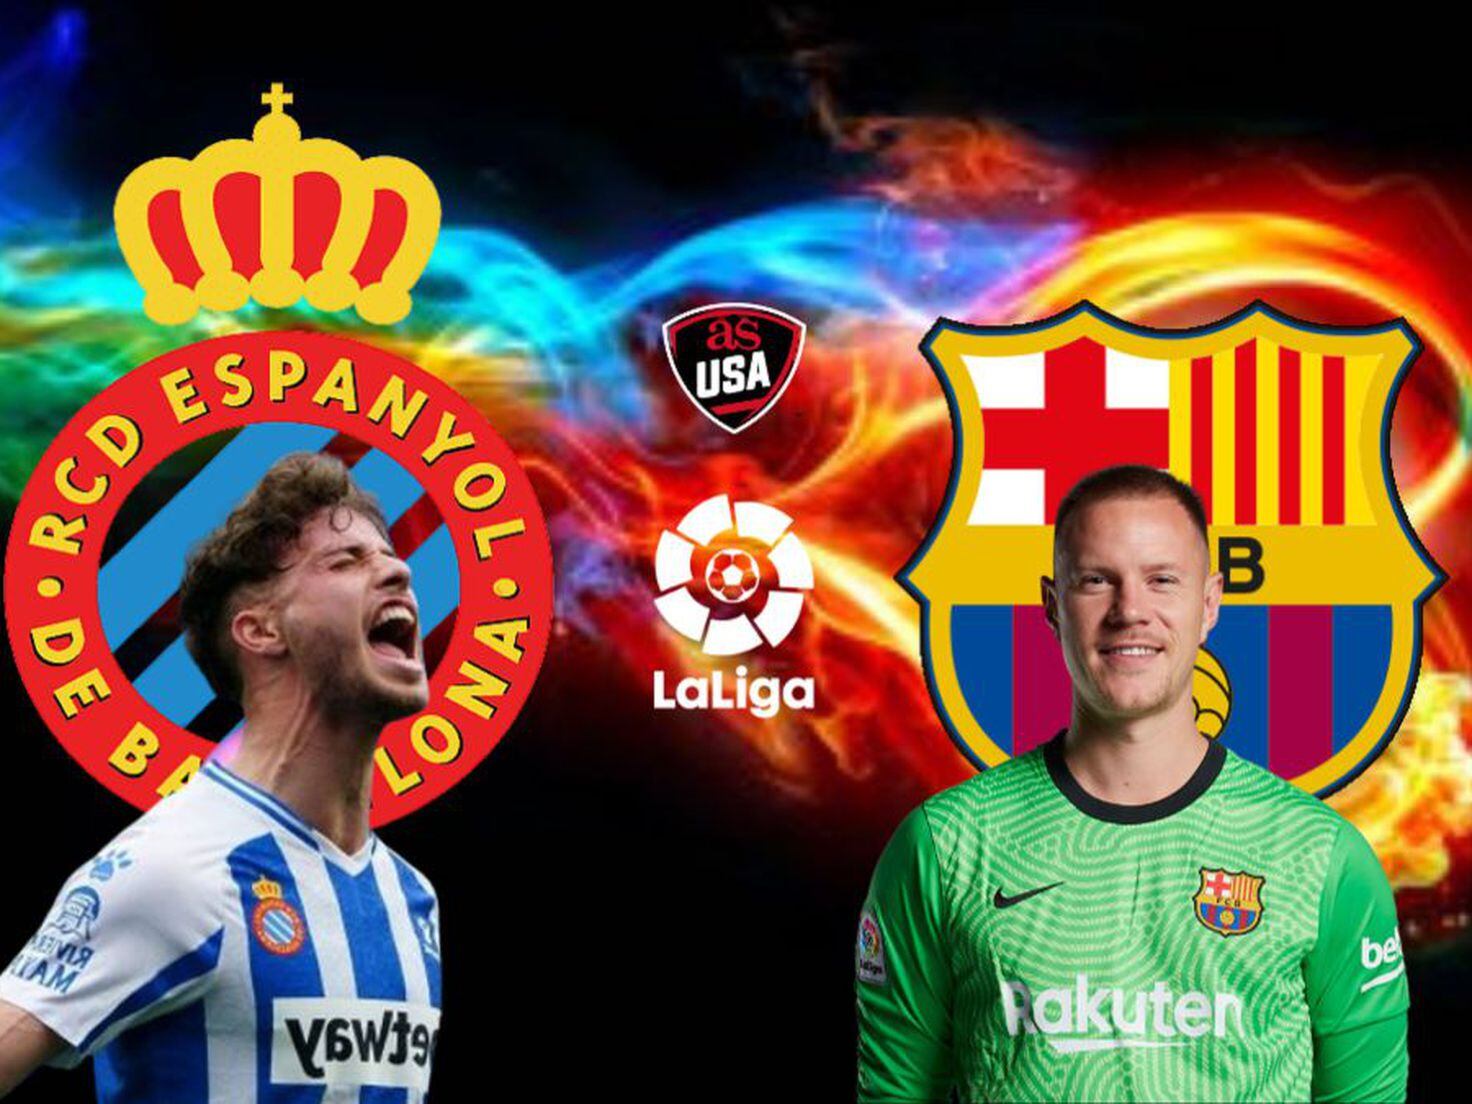 Espanyol Pro League Soccer Kits 22/23 - Espanyol Pro Kick Soccer Kits